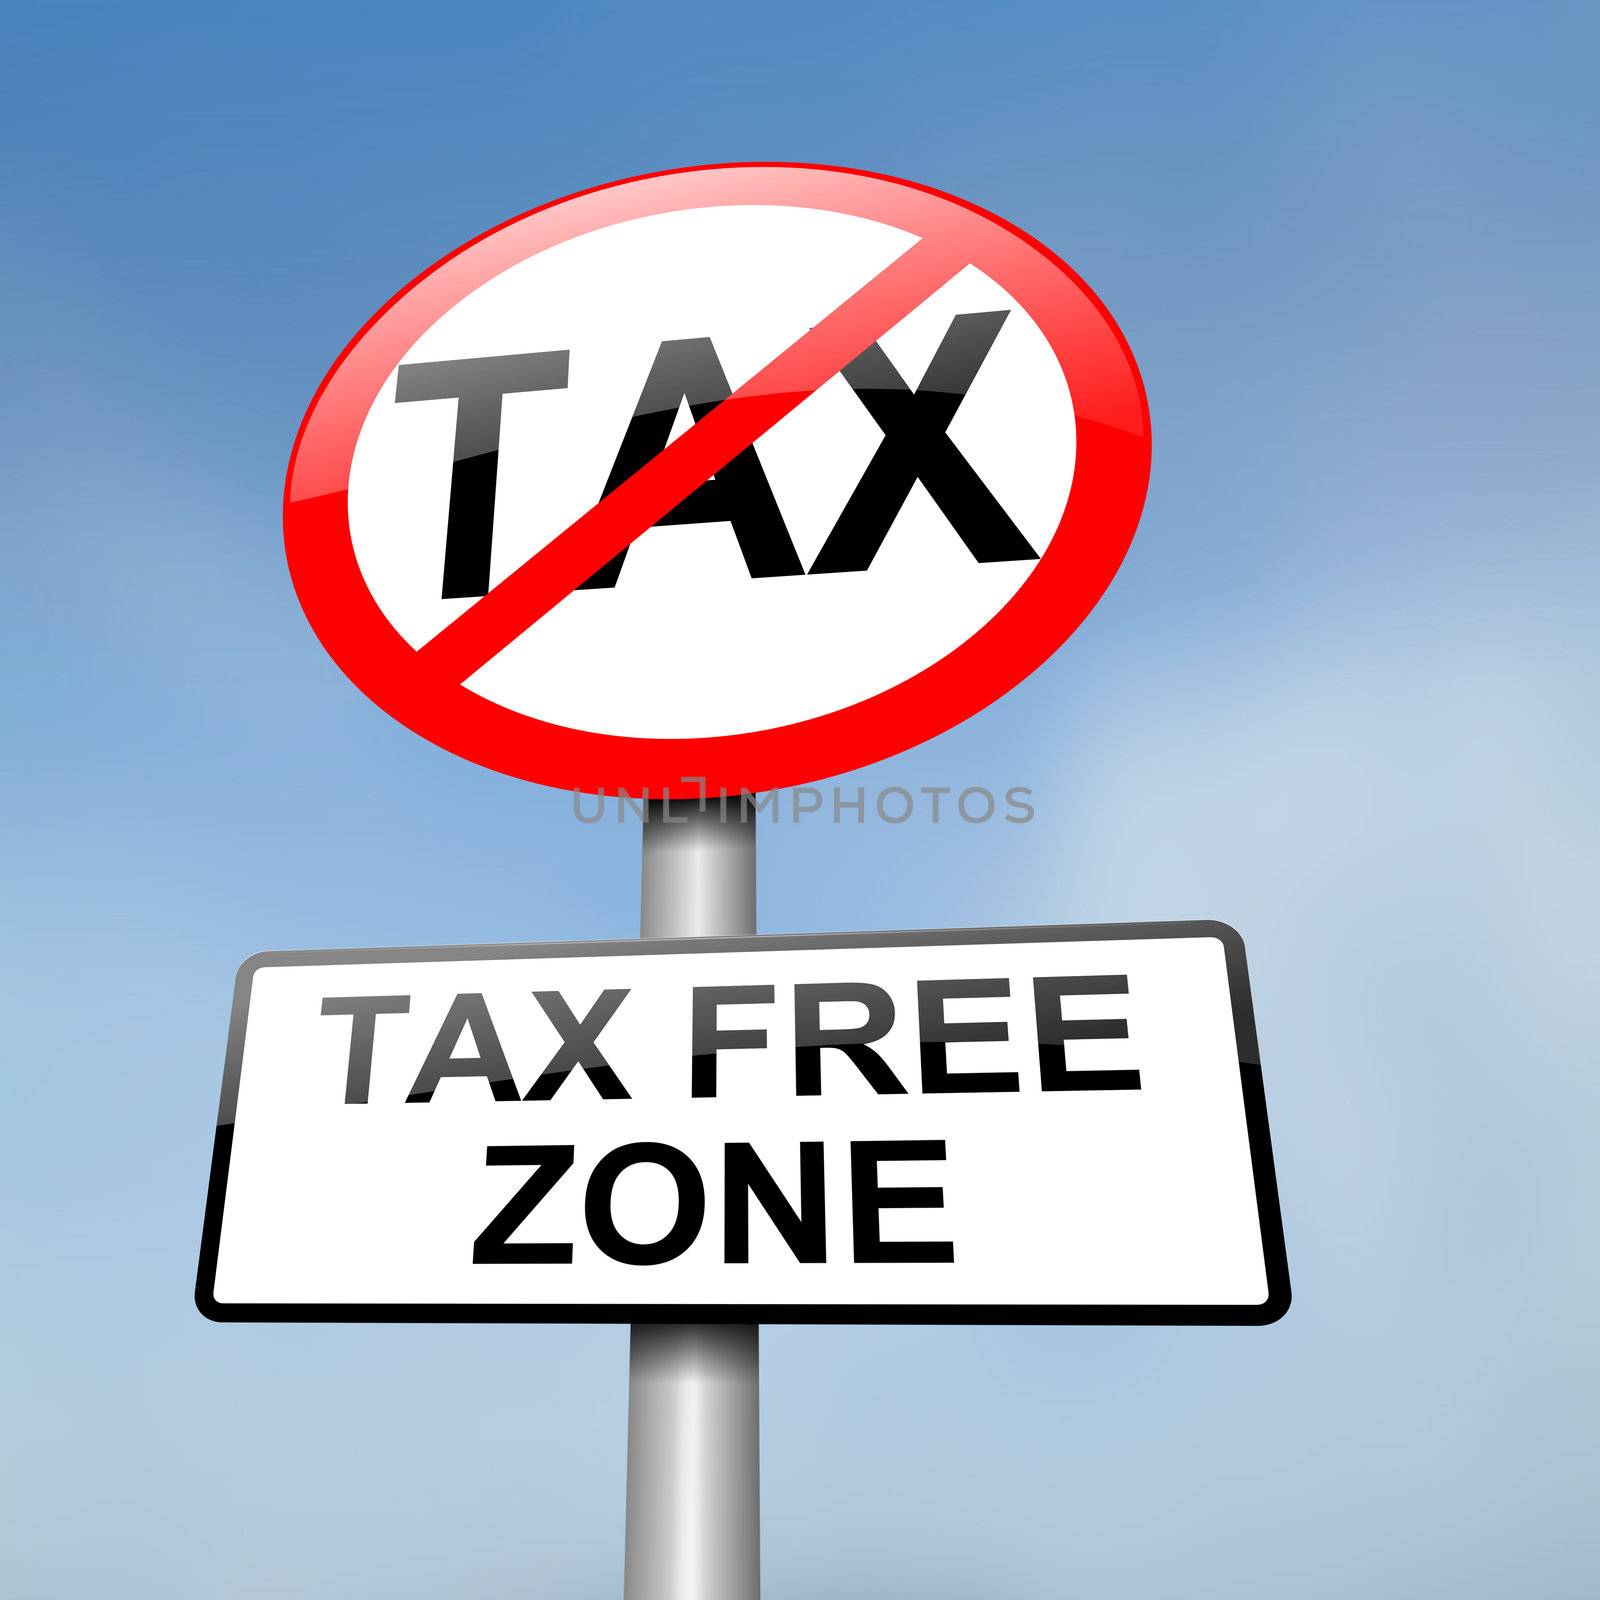 Tax free zone. by 72soul